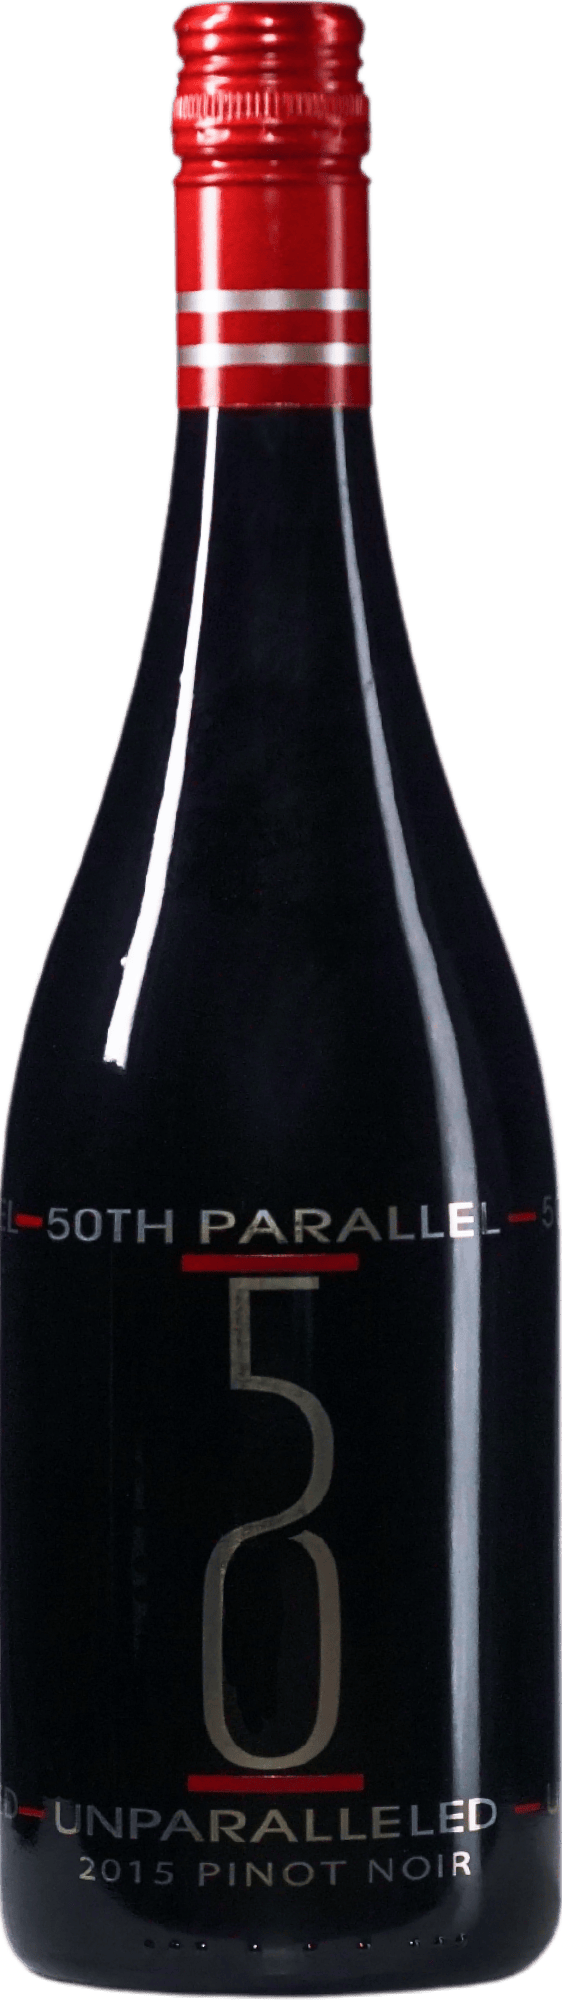 Unparalleled Pinot Noir